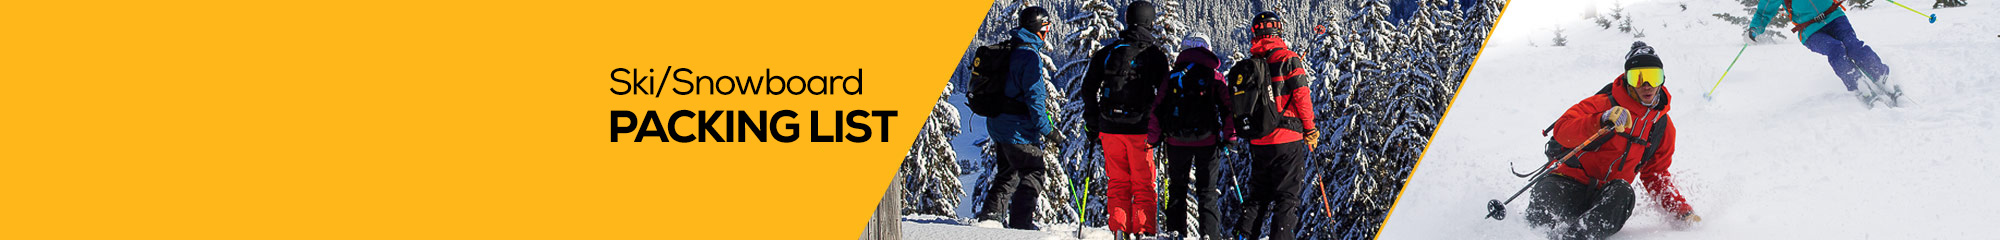 Ski Snowboard Packing List